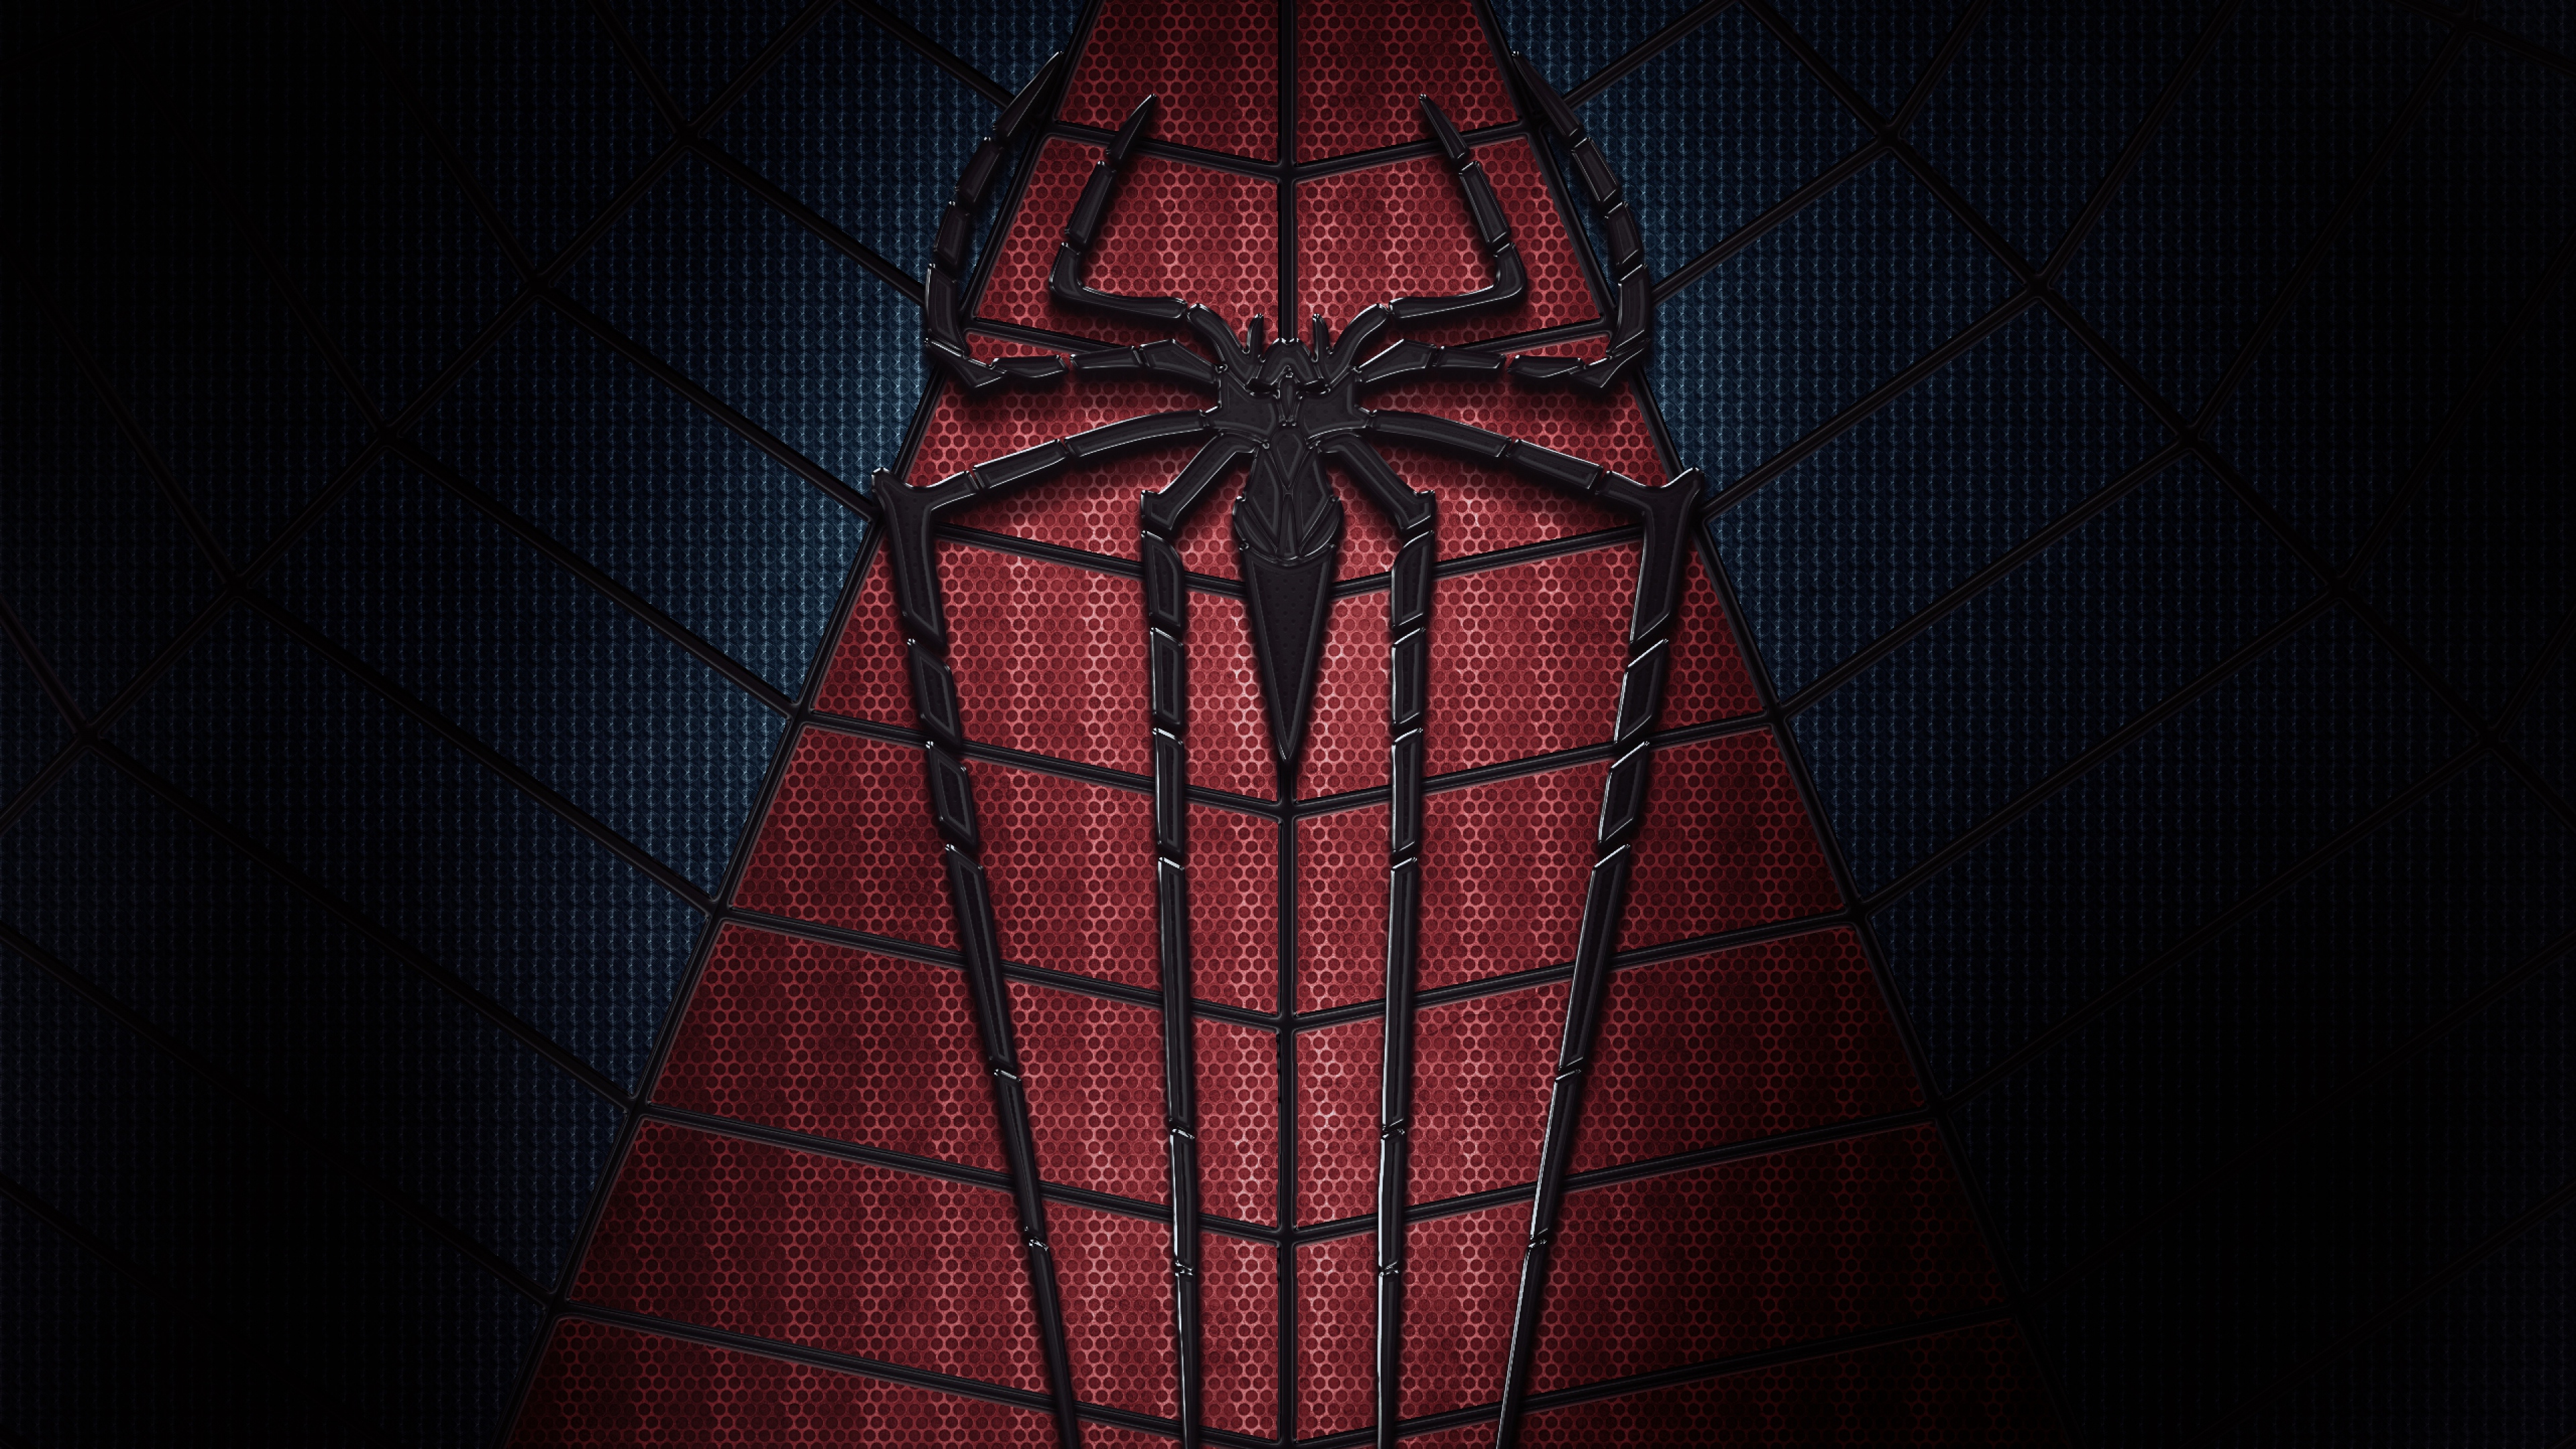 Wallpaper 3840x2160 The amazing spider man 2 Logo Superhero 2014 4K